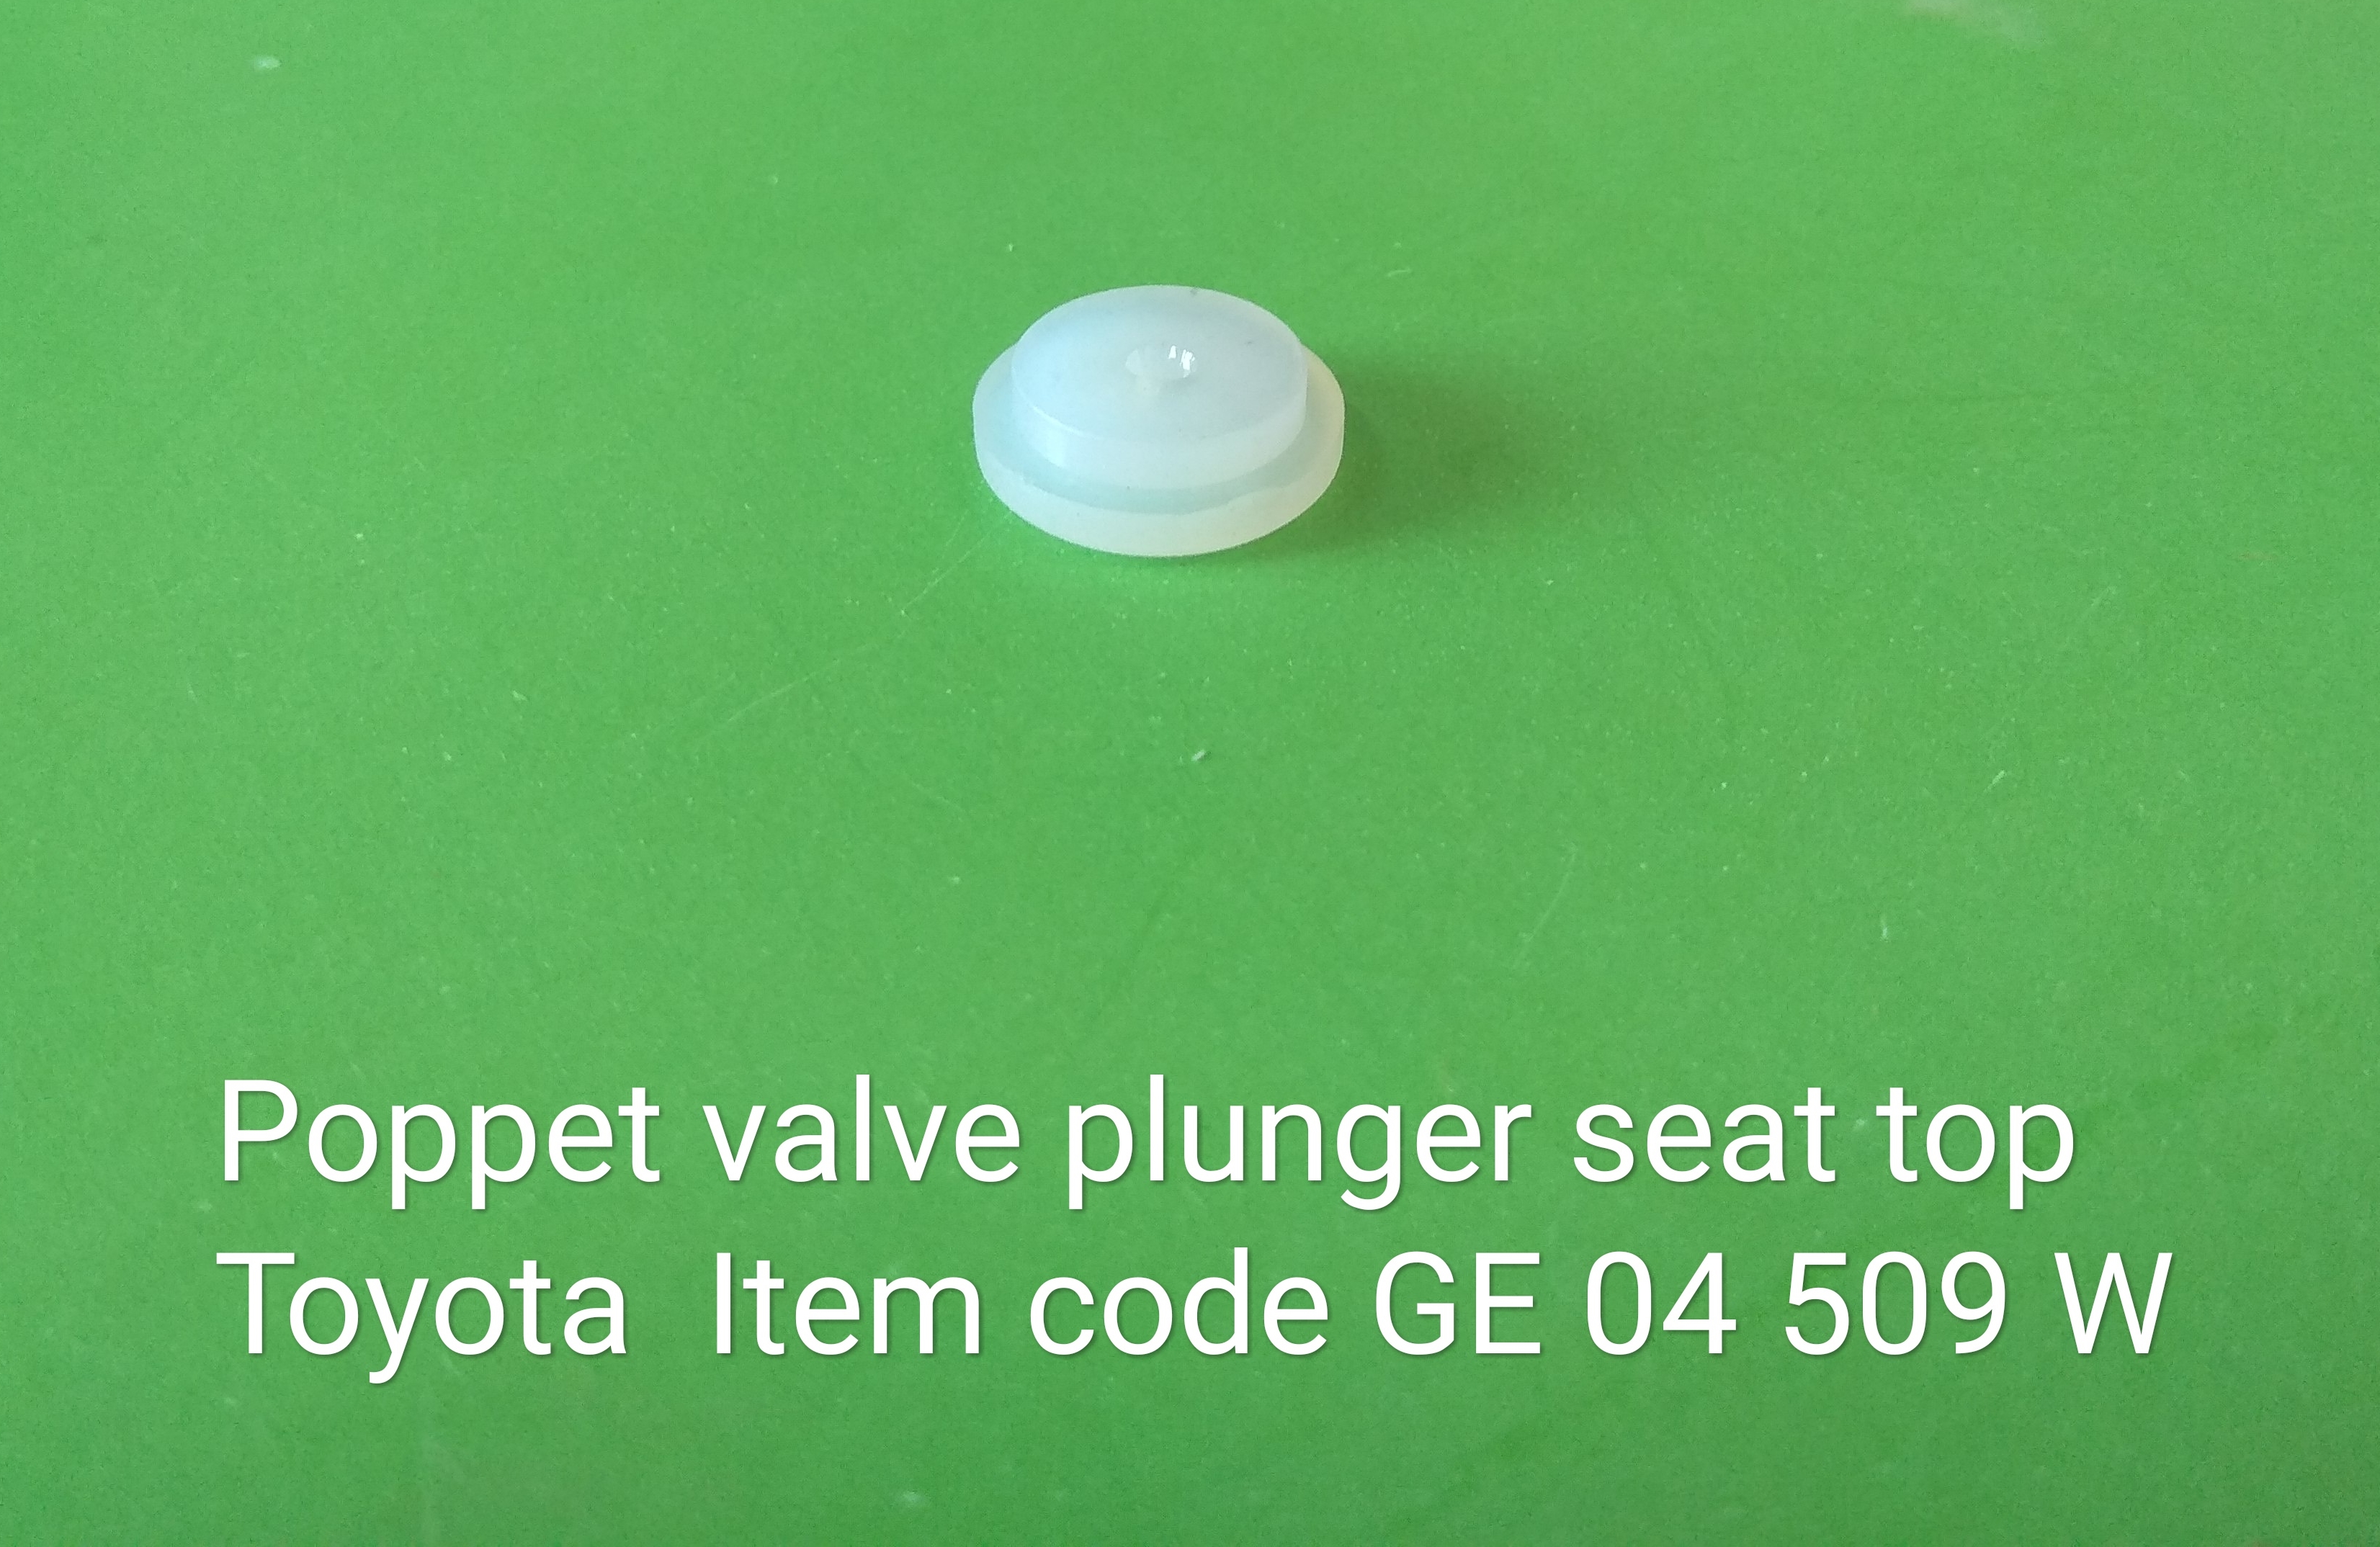 GE_04_509W_Poppet_valve_plunger_seat_top_(White)_53_15.jpg